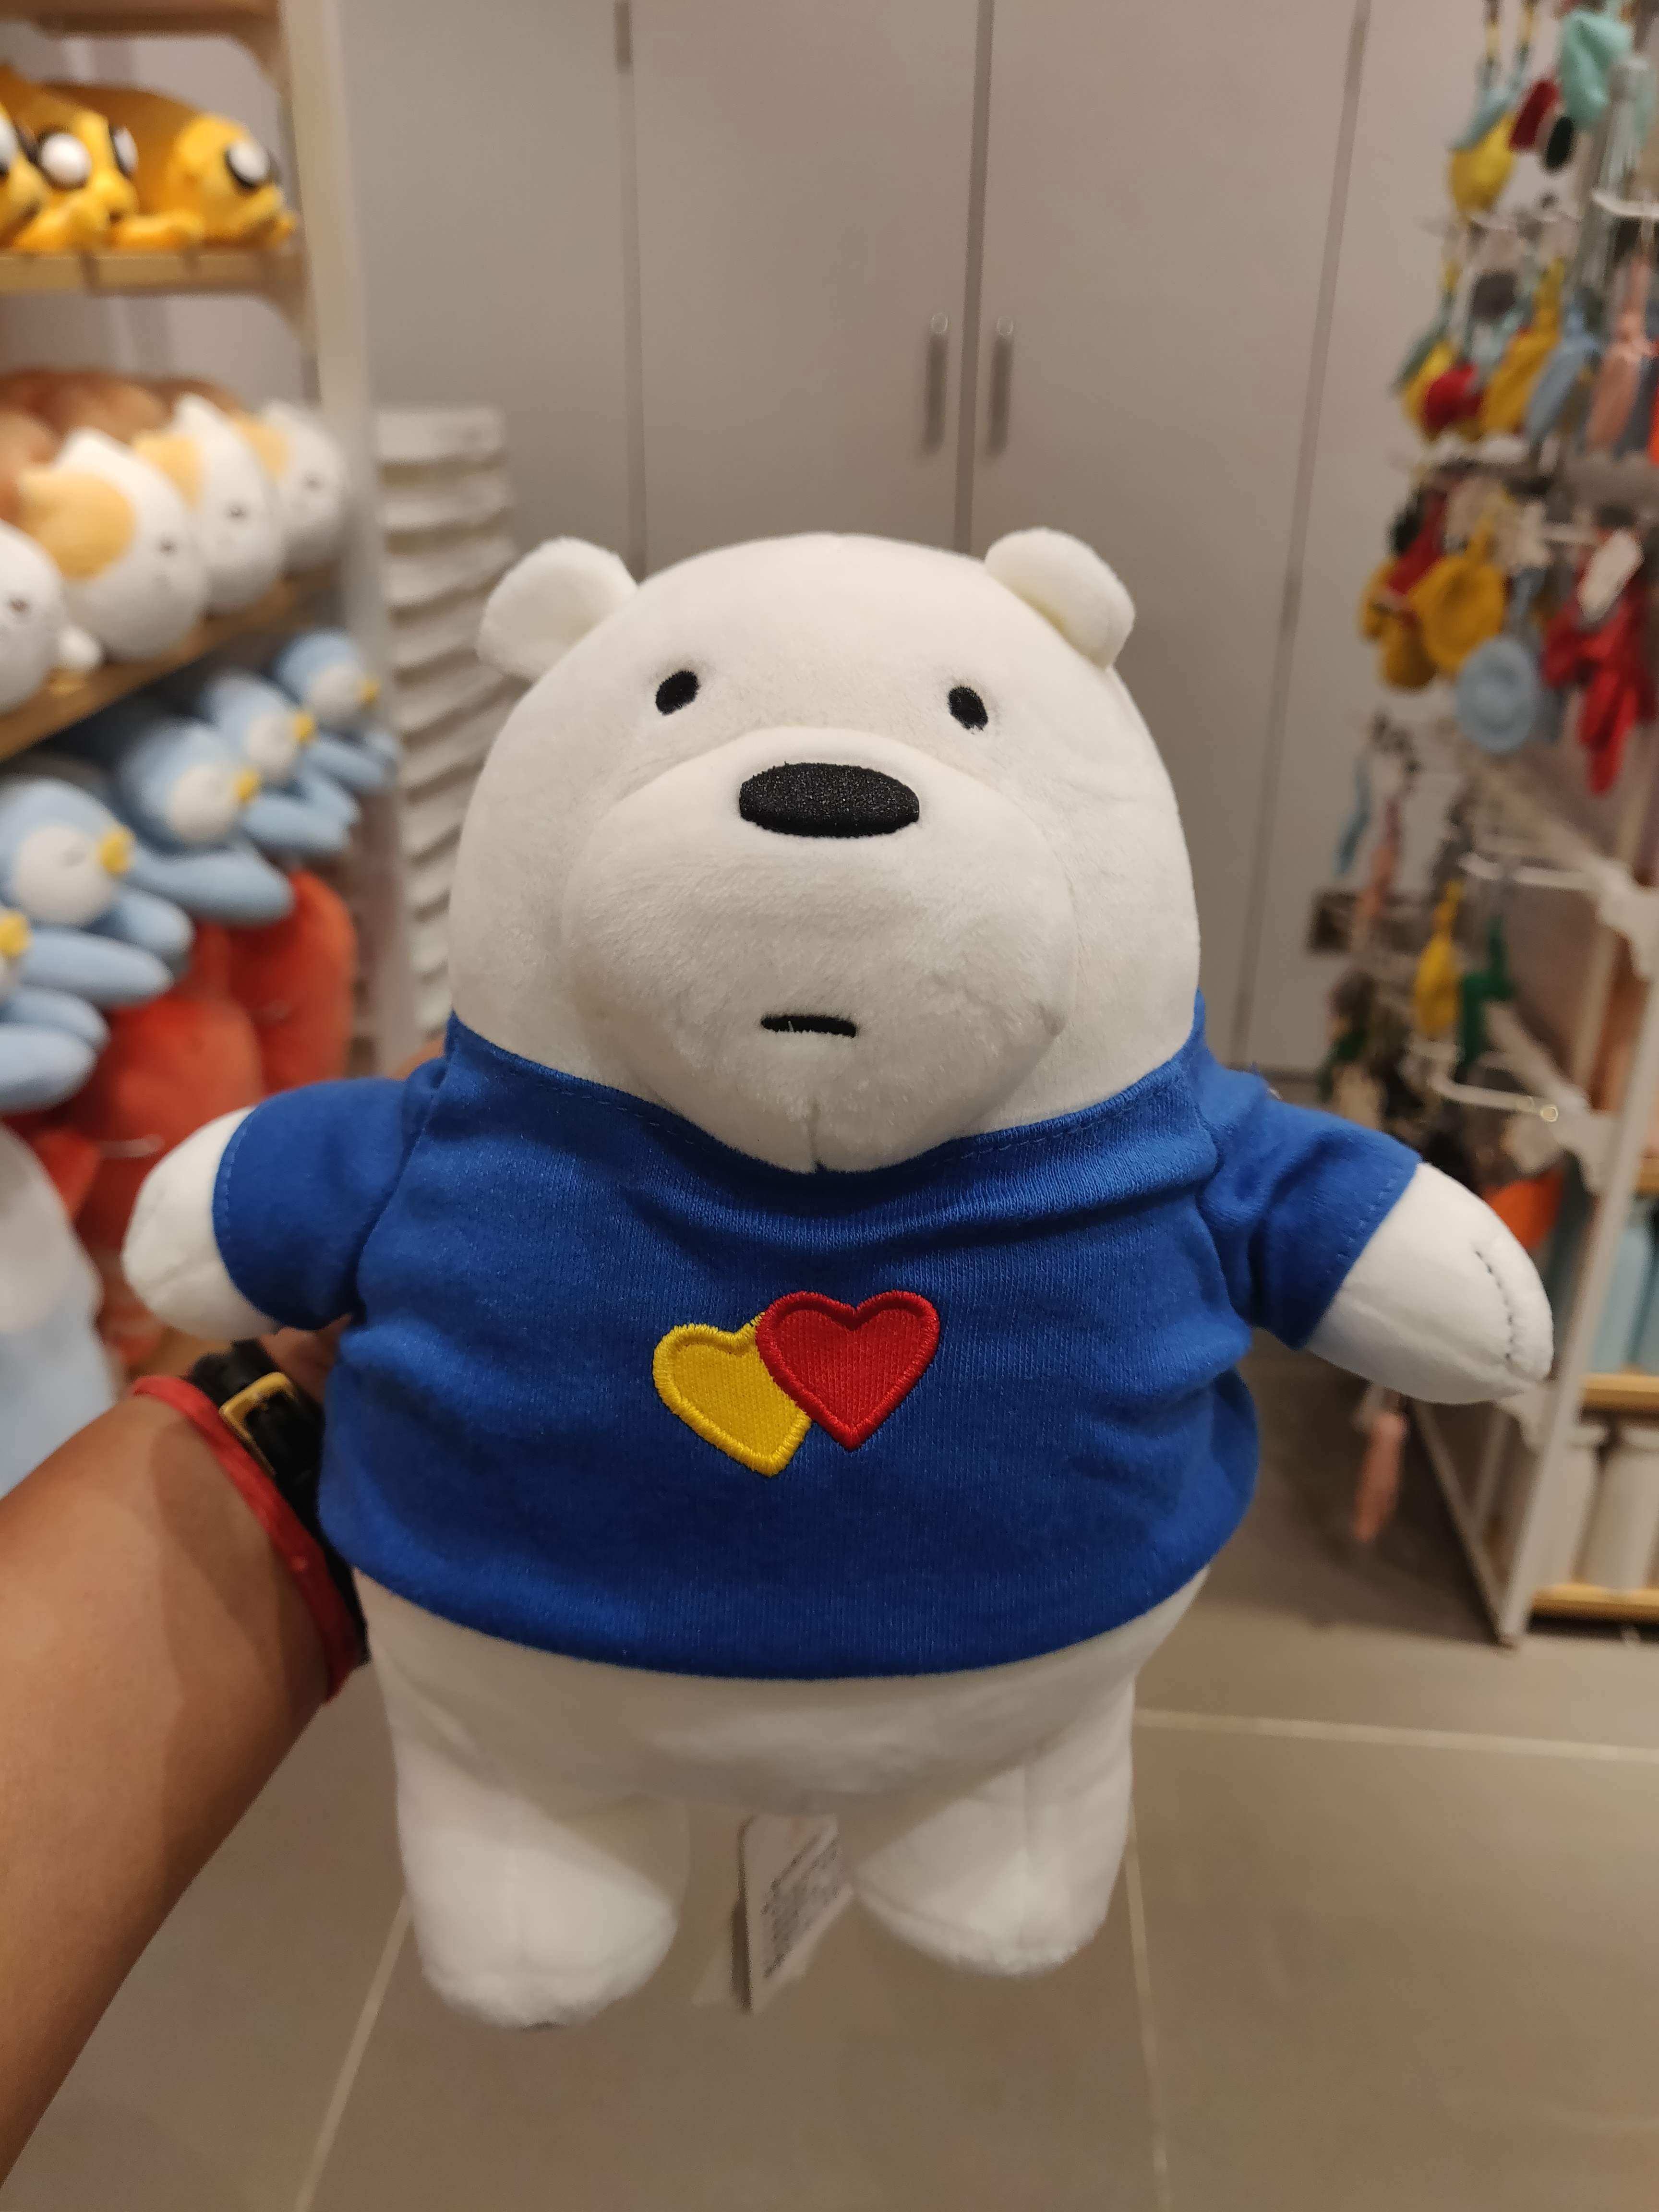 Stuffed toy,Toy,Plush,Teddy bear,Textile,Bear,Room,Mascot,Child